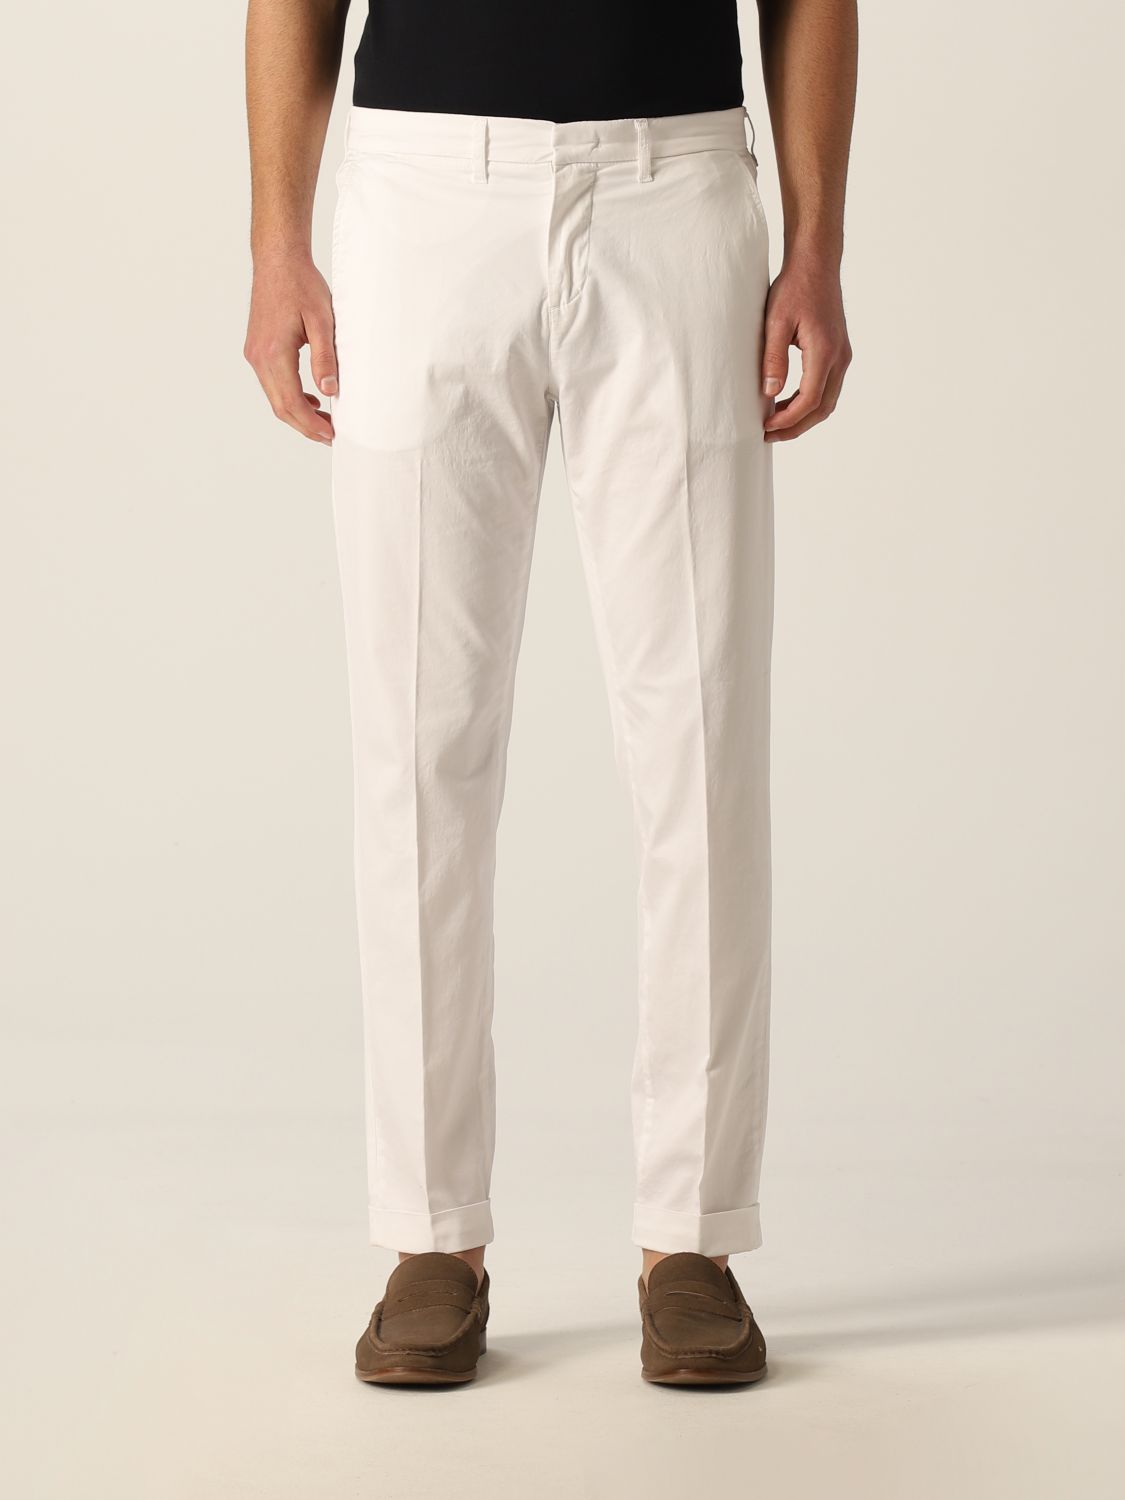 Pantalone in cotone stretch Giglio.com Uomo Abbigliamento Pantaloni e jeans Pantaloni Pantaloni stretch 